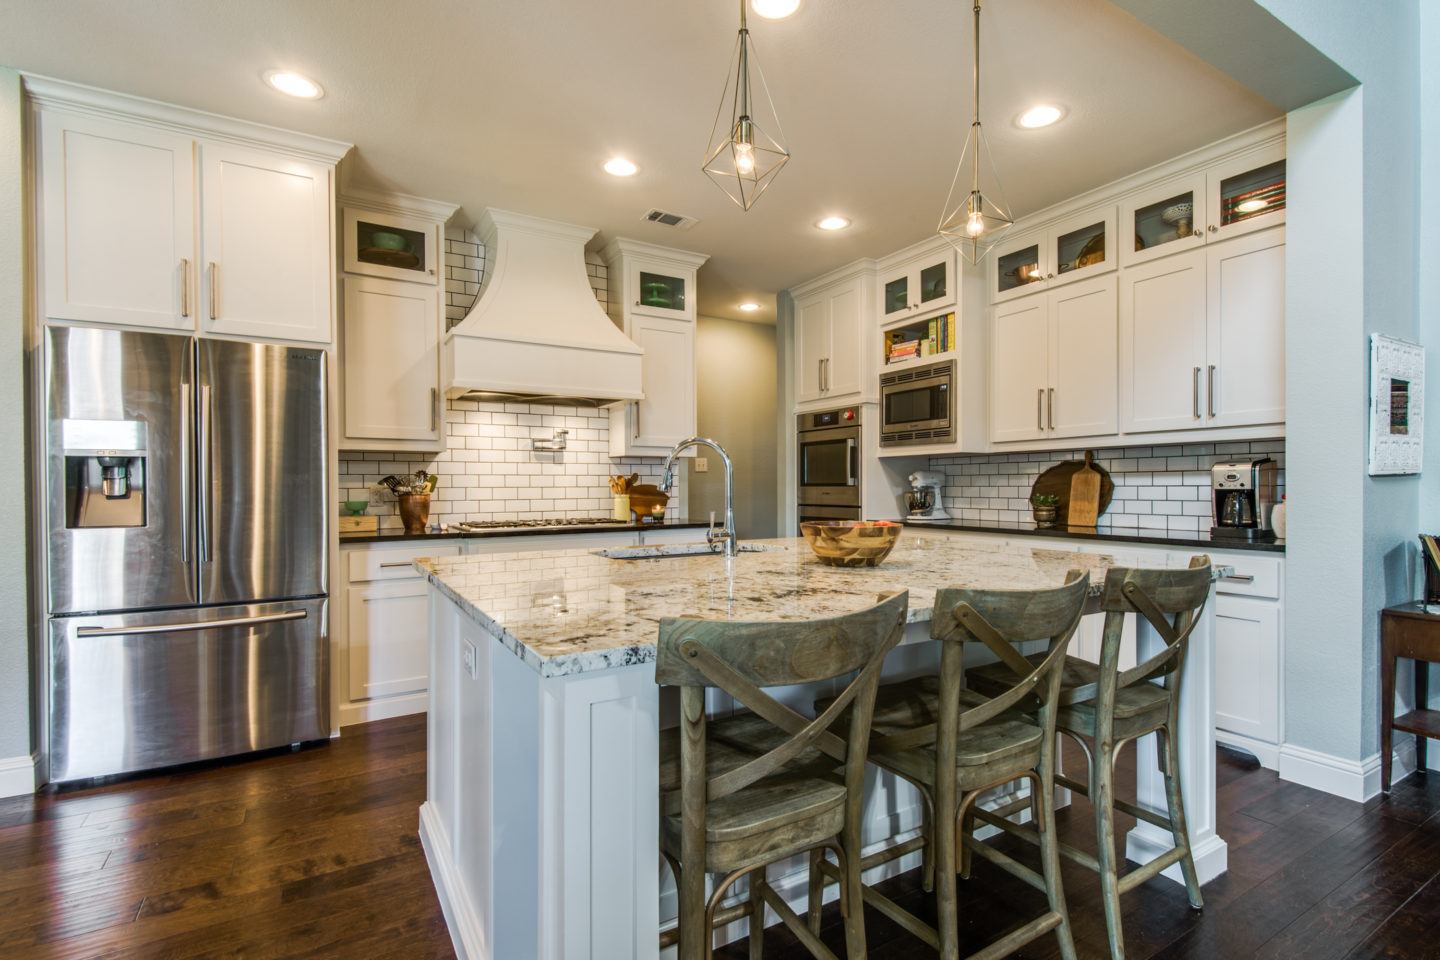 kitchen design trends - remodeled kitchen with white cabinets and subway tile backsplash